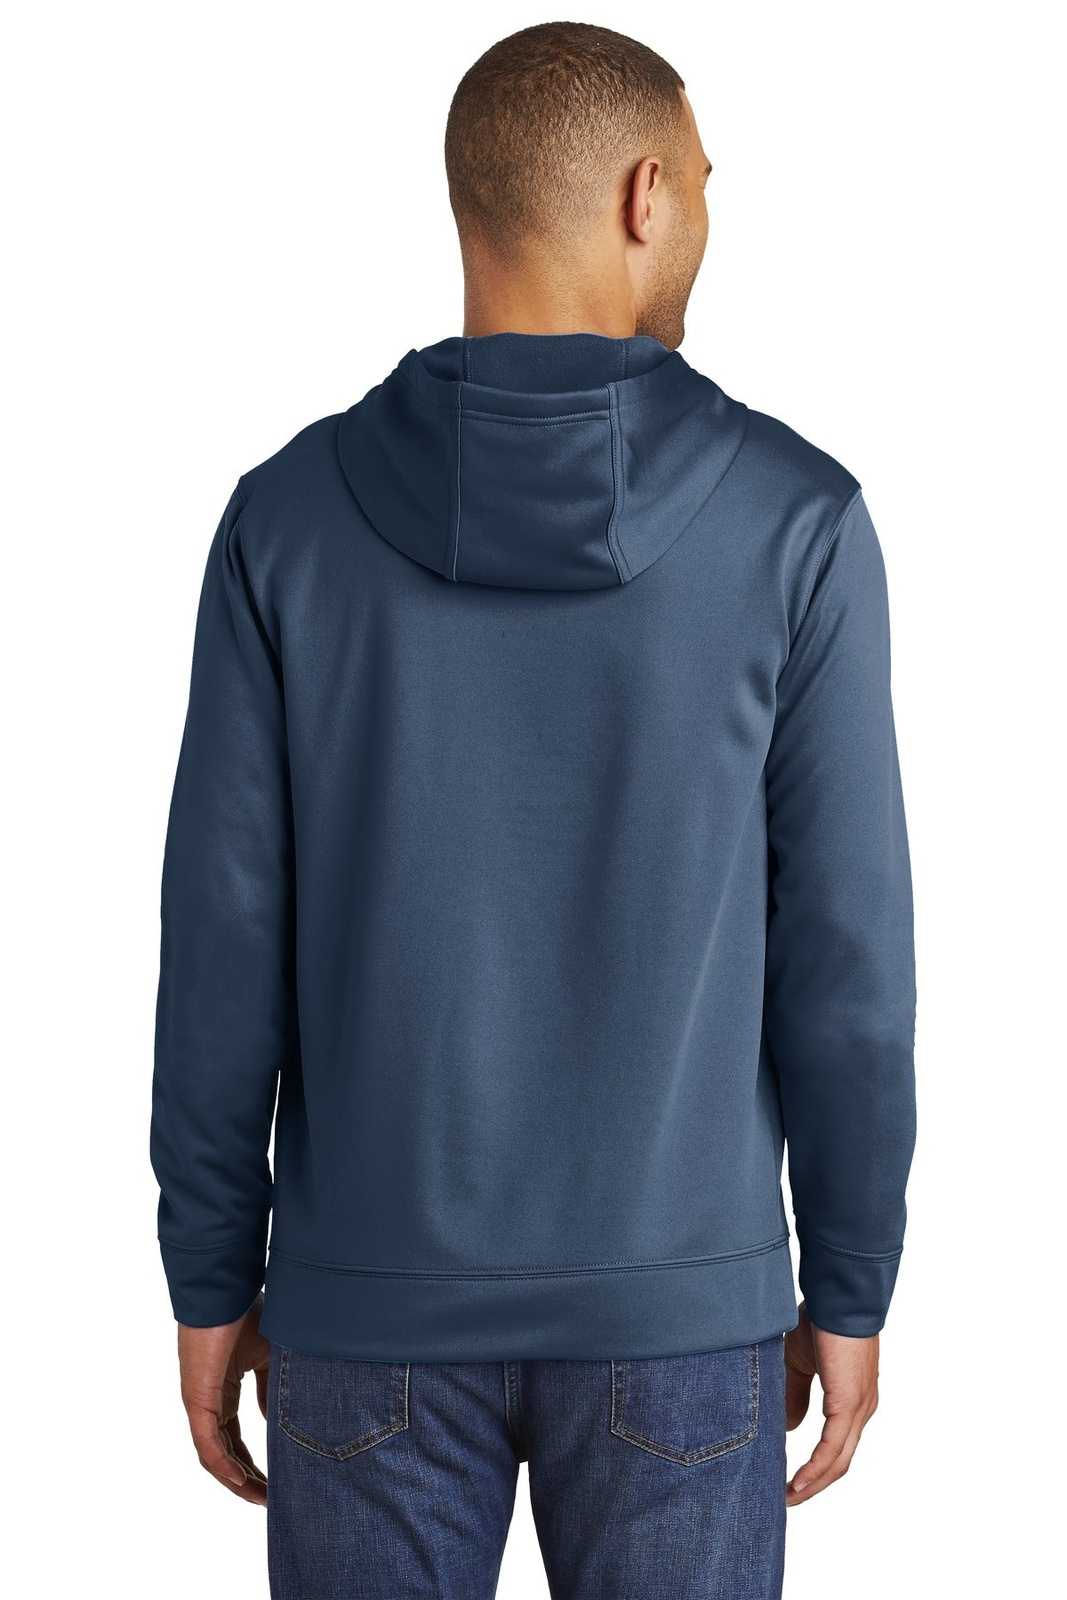 Port & Company PC590H Performance Fleece Pullover Hooded Sweatshirt - Deep Navy - HIT a Double - 1